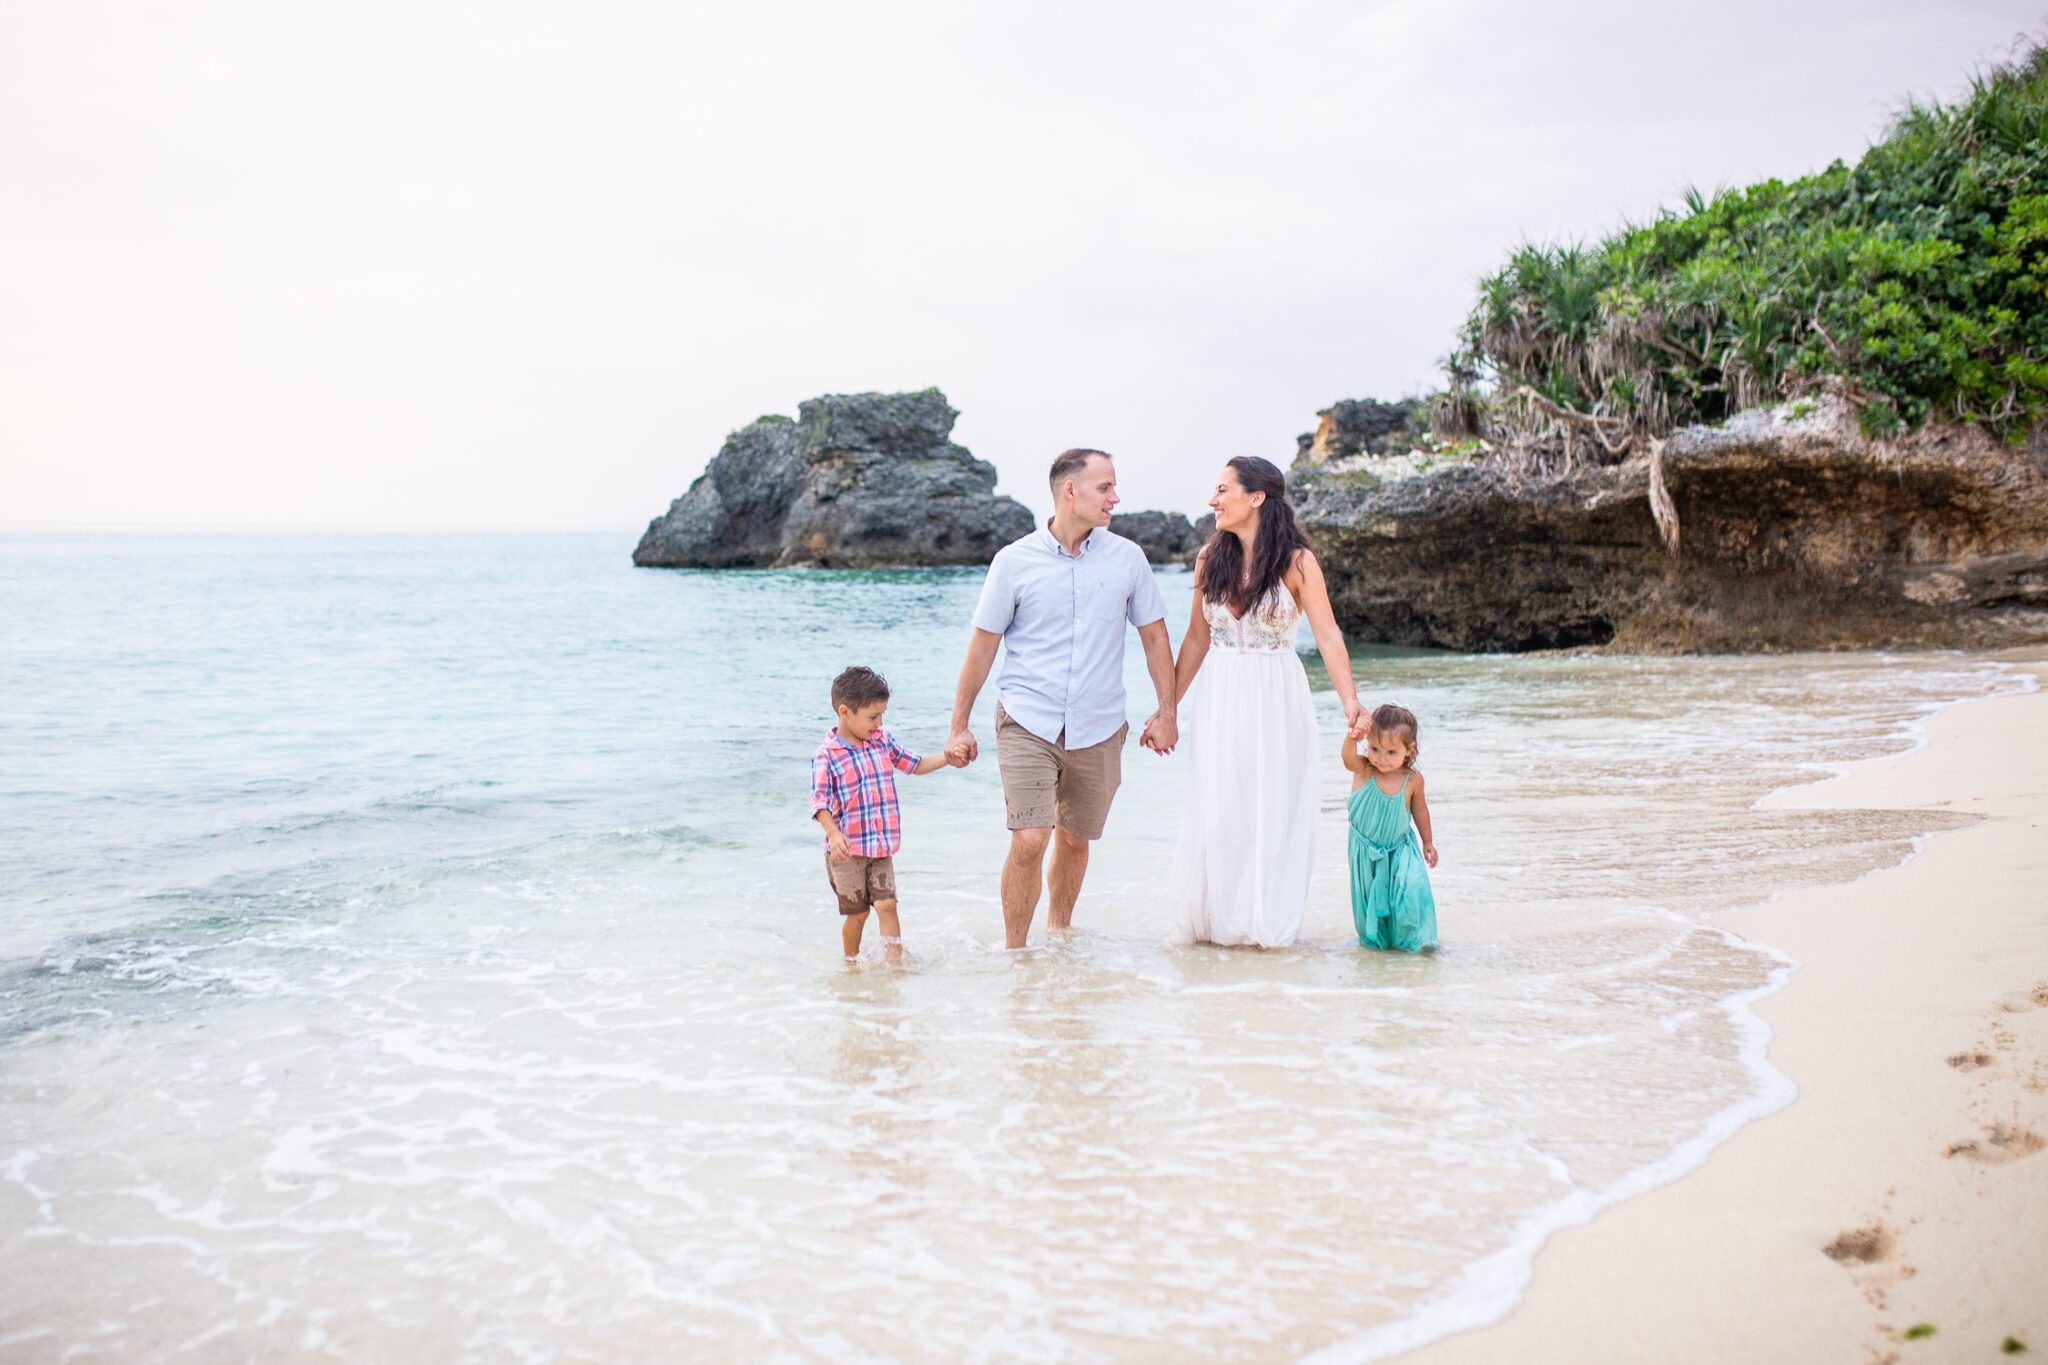 Oahu Family Photographer, Hawaii on the beach by alison bell, photographer